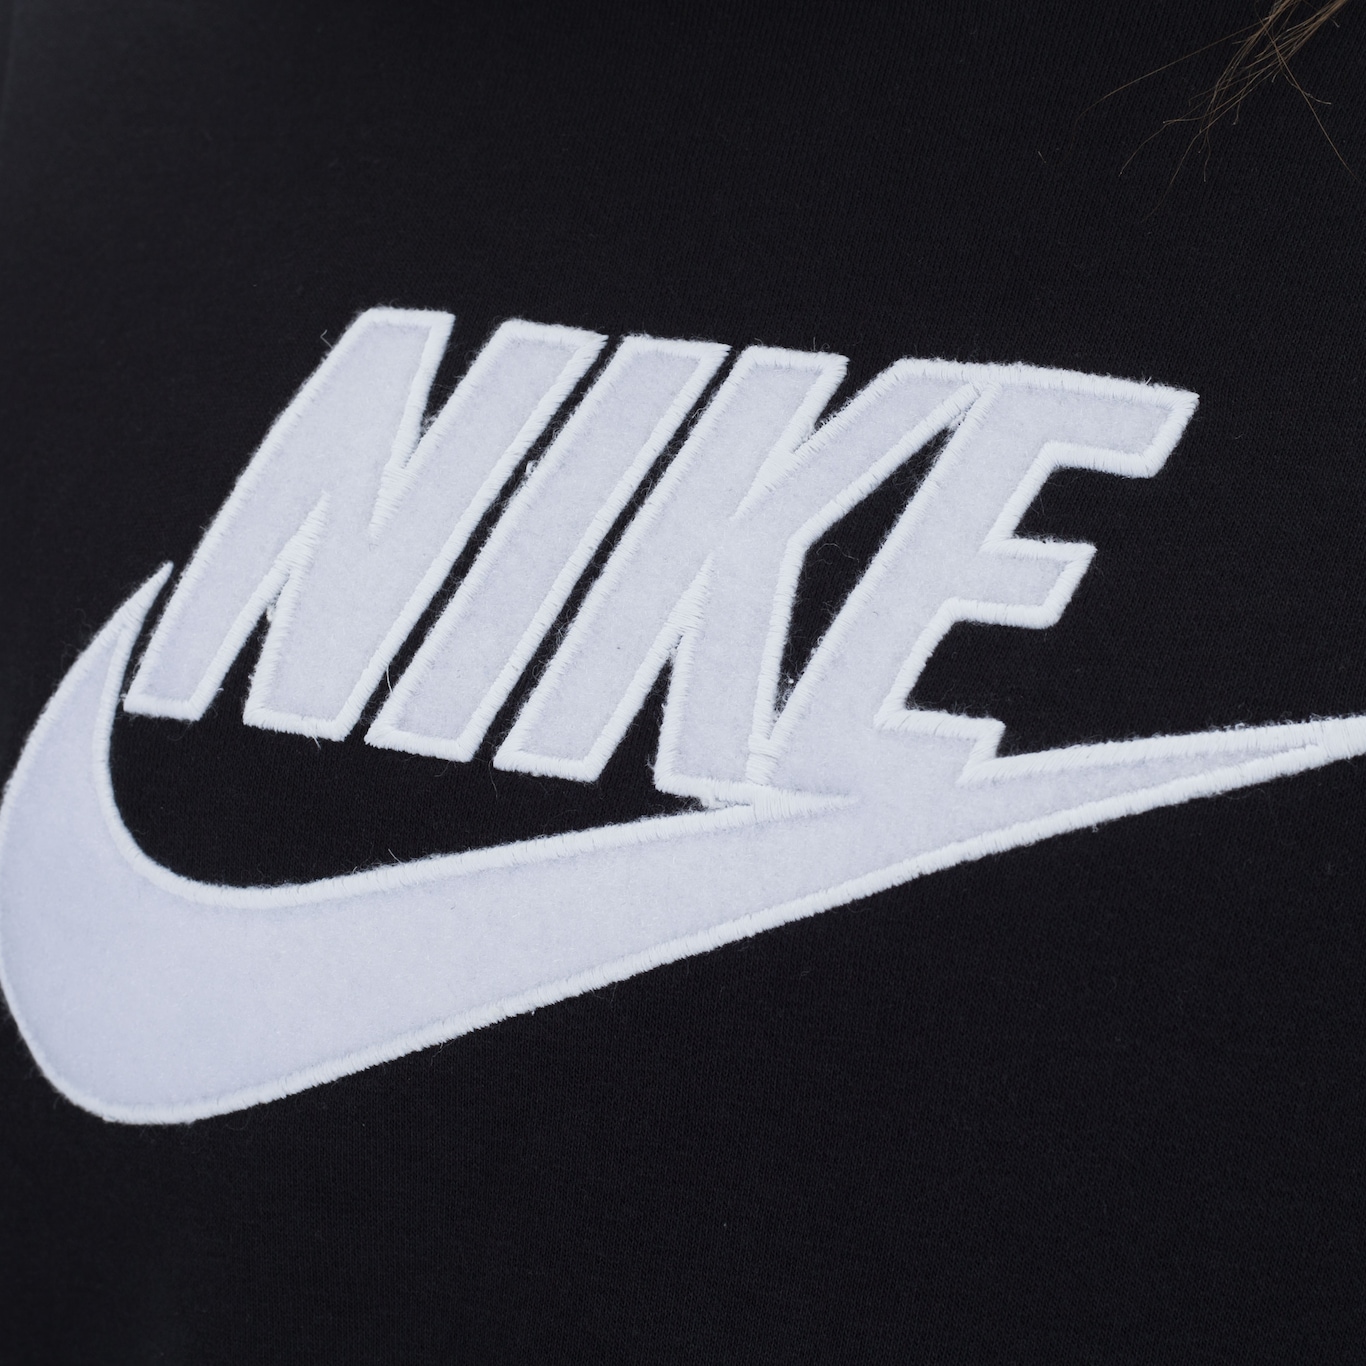 Blusão de Moletom com Capuz Nike Sportswear Icon Clash FLC Hoodie BB -  Feminino